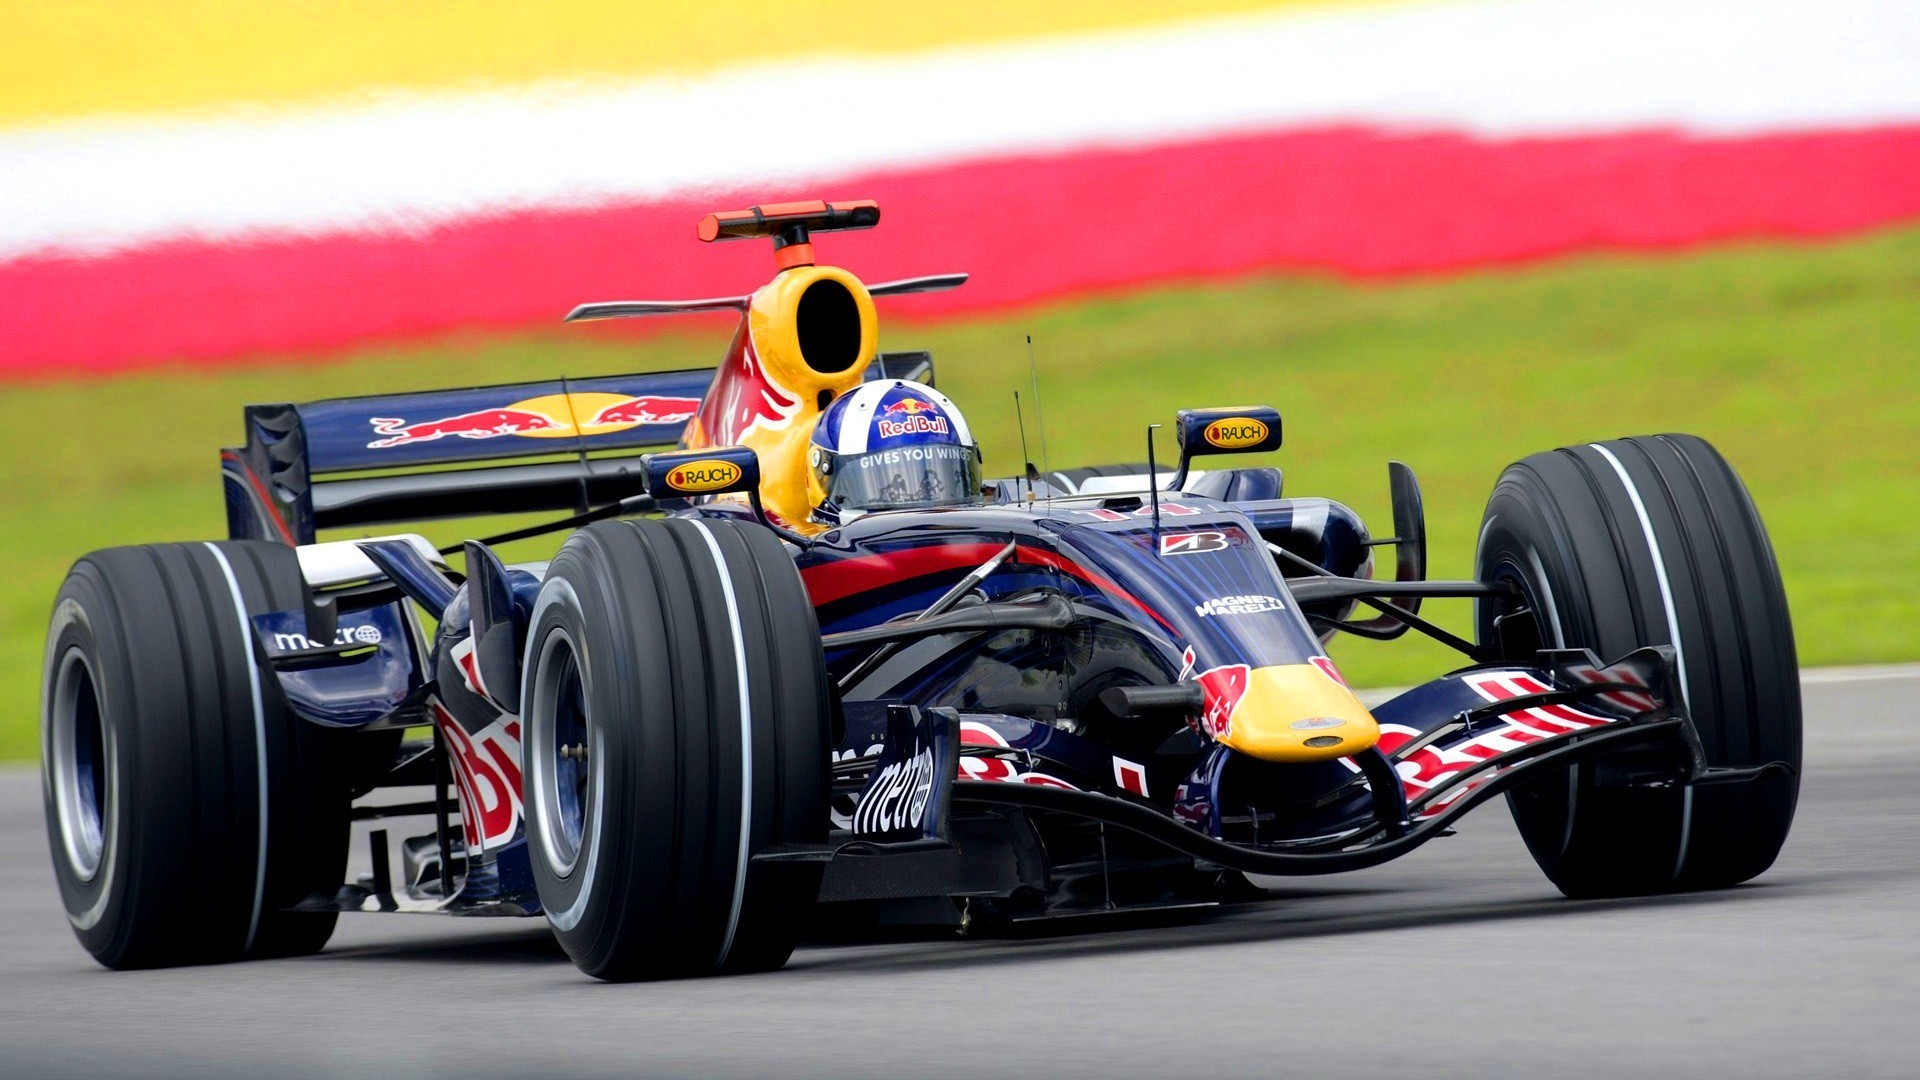 General 1920x1080 Formula 1 Red Bull Racing race cars vehicle racing car sport motorsport livery